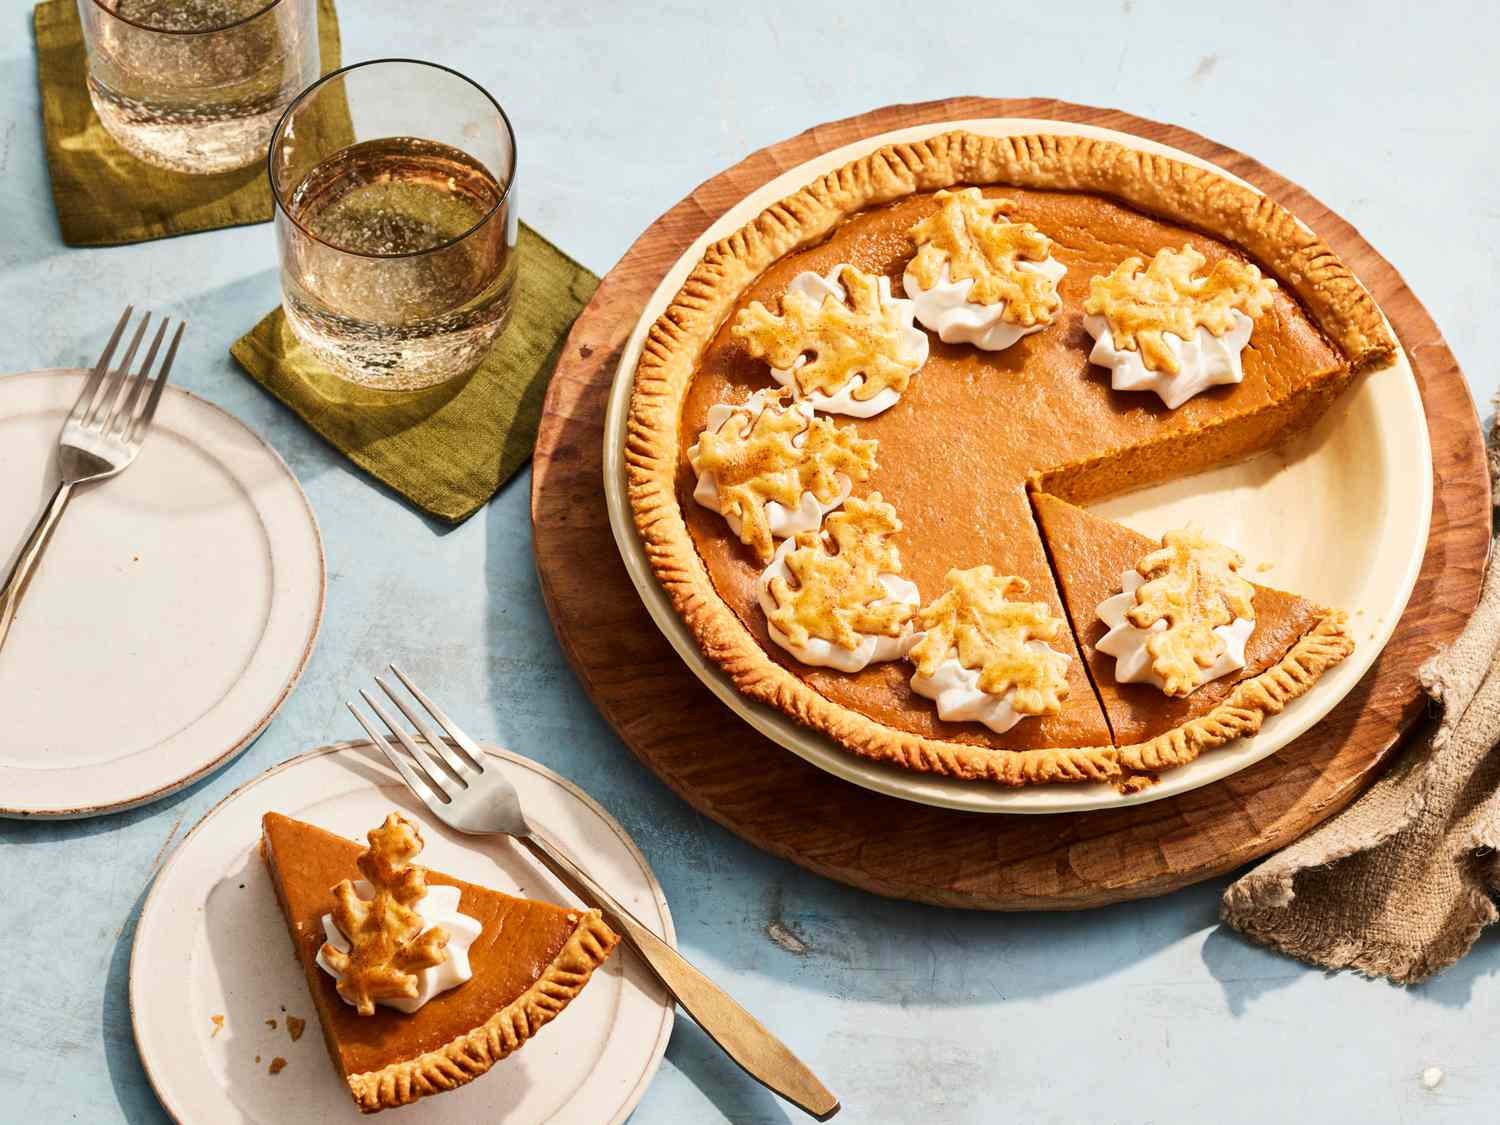 Fall-colored Food Quiz Pumpkin pie